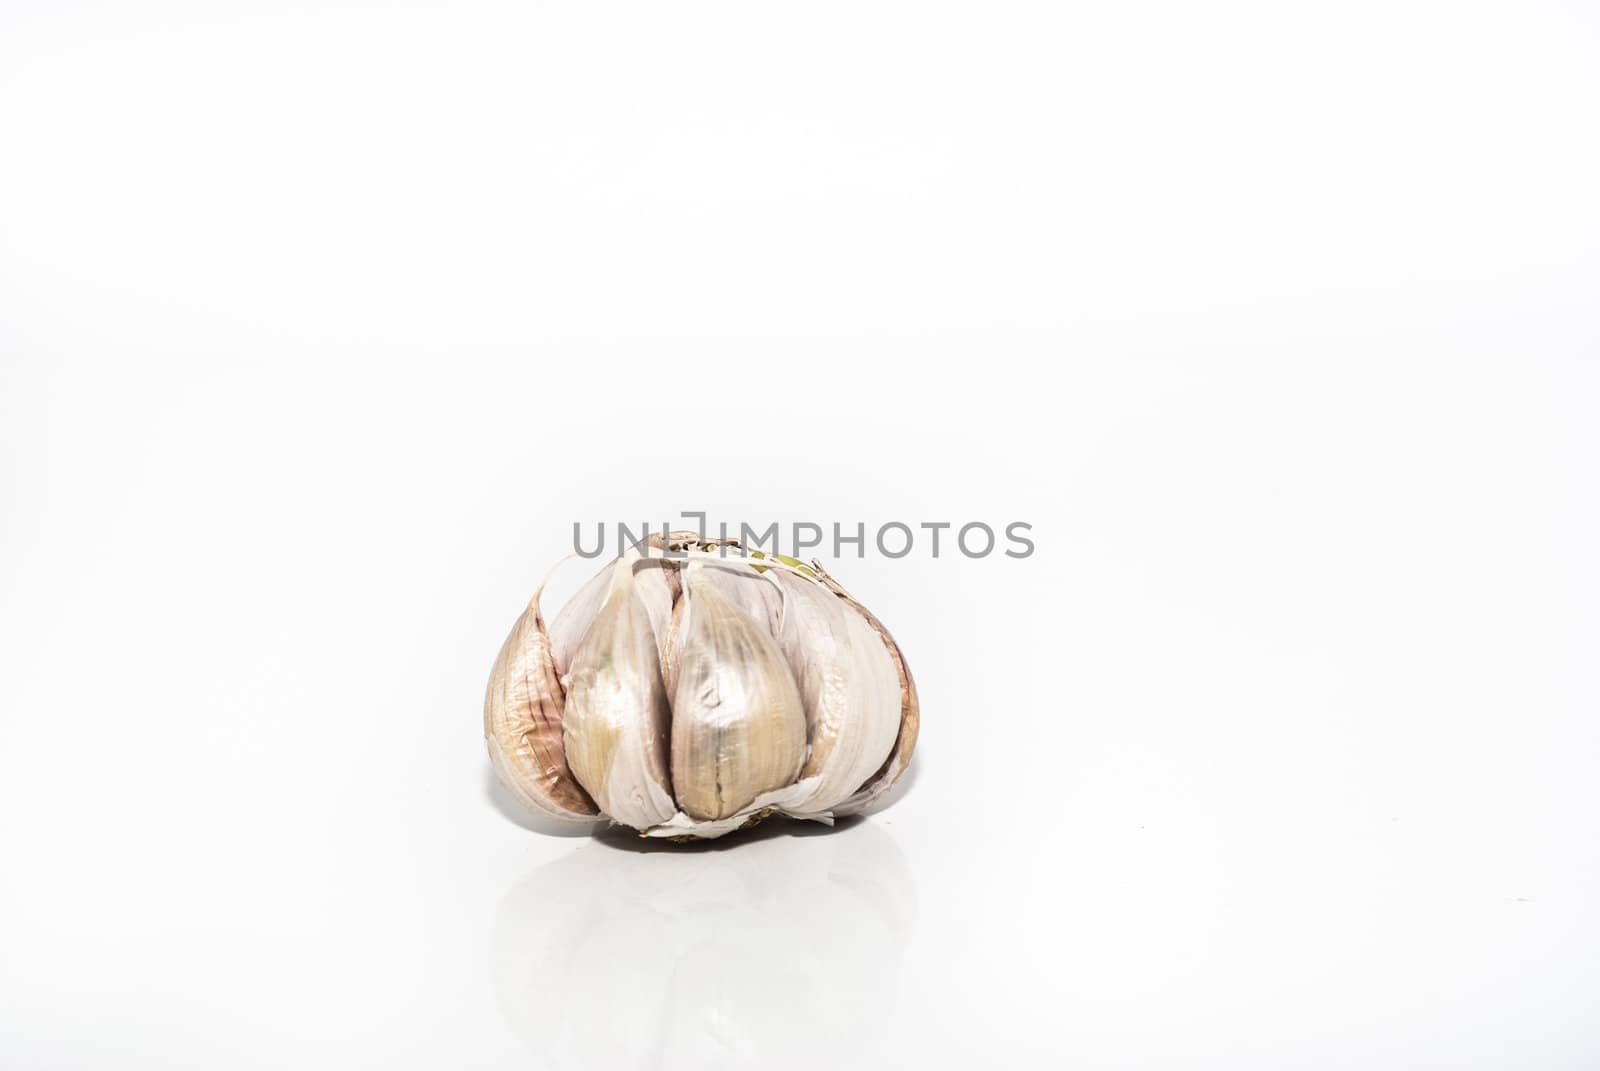 Garlic isolated on white background by gandolfocannatella